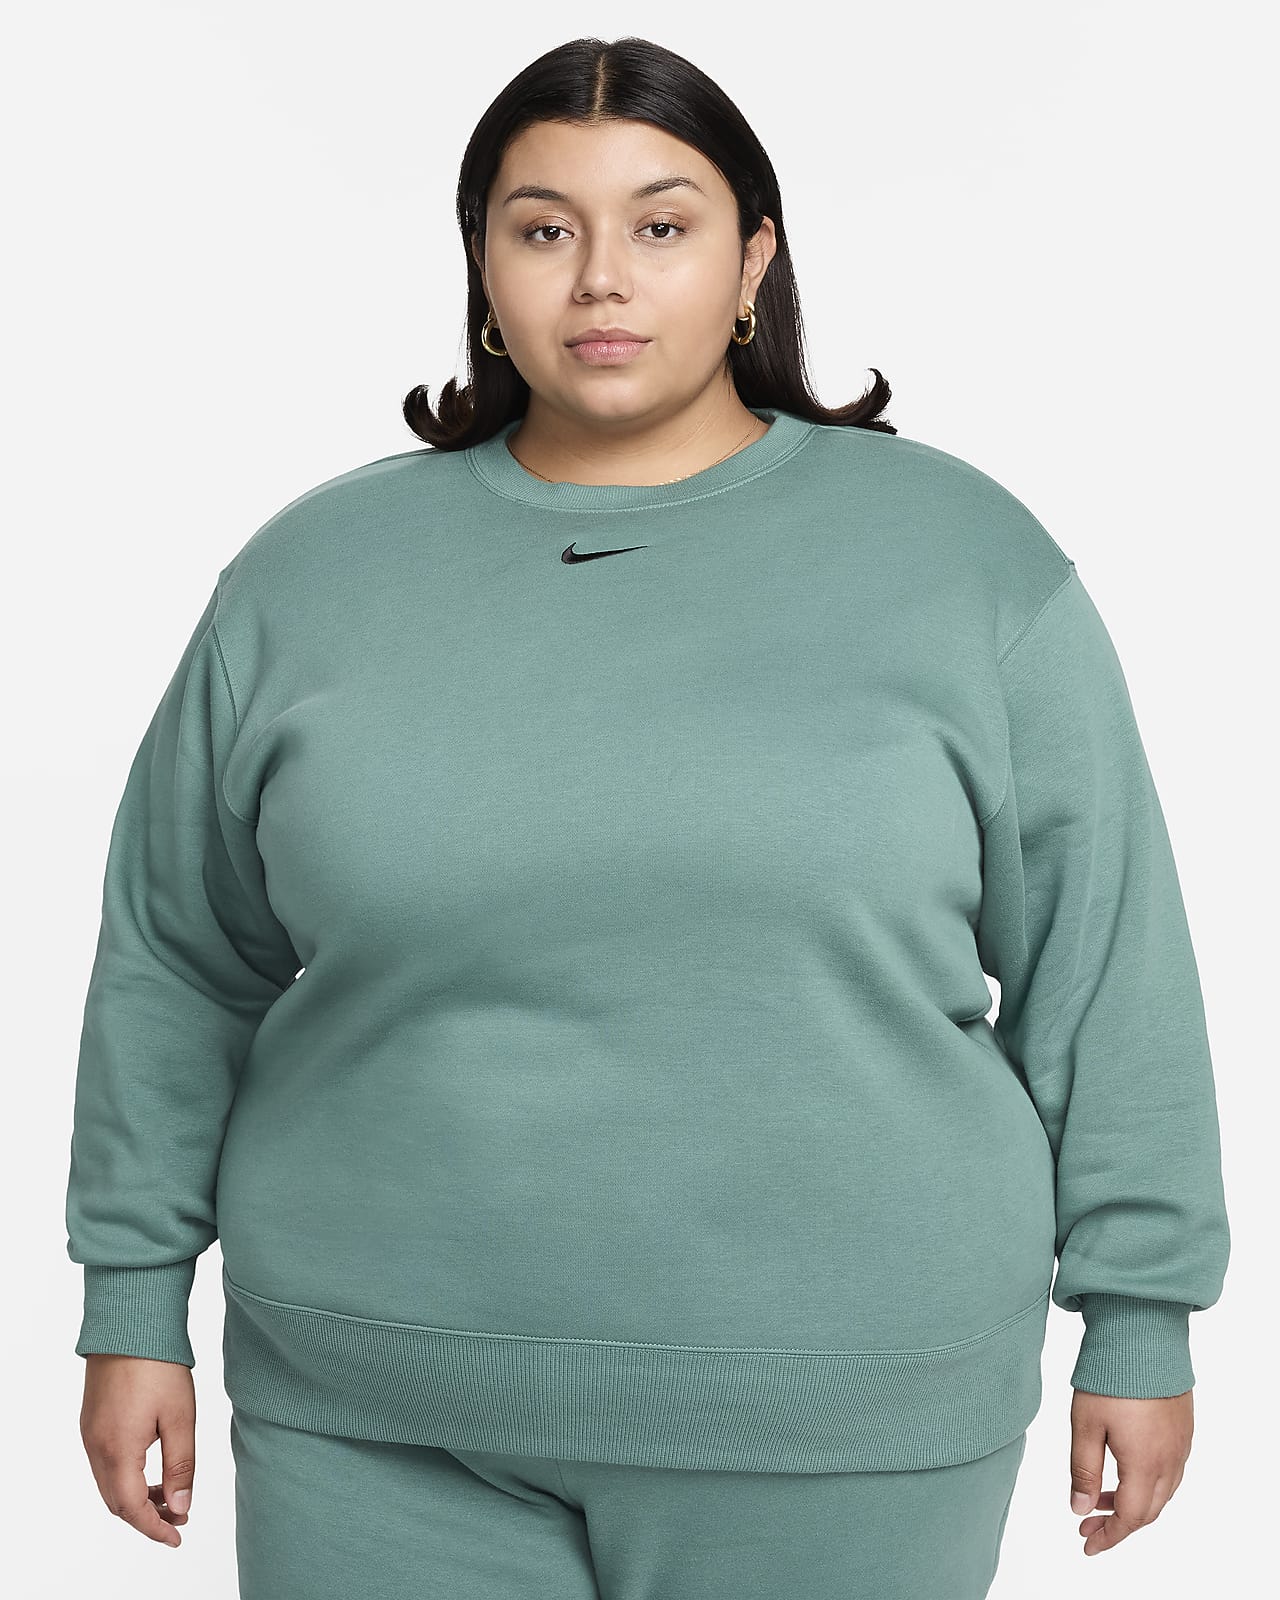 Sweatshirt de gola redonda folgada Nike Sportswear Phoenix Fleece para mulher (tamanhos grandes)